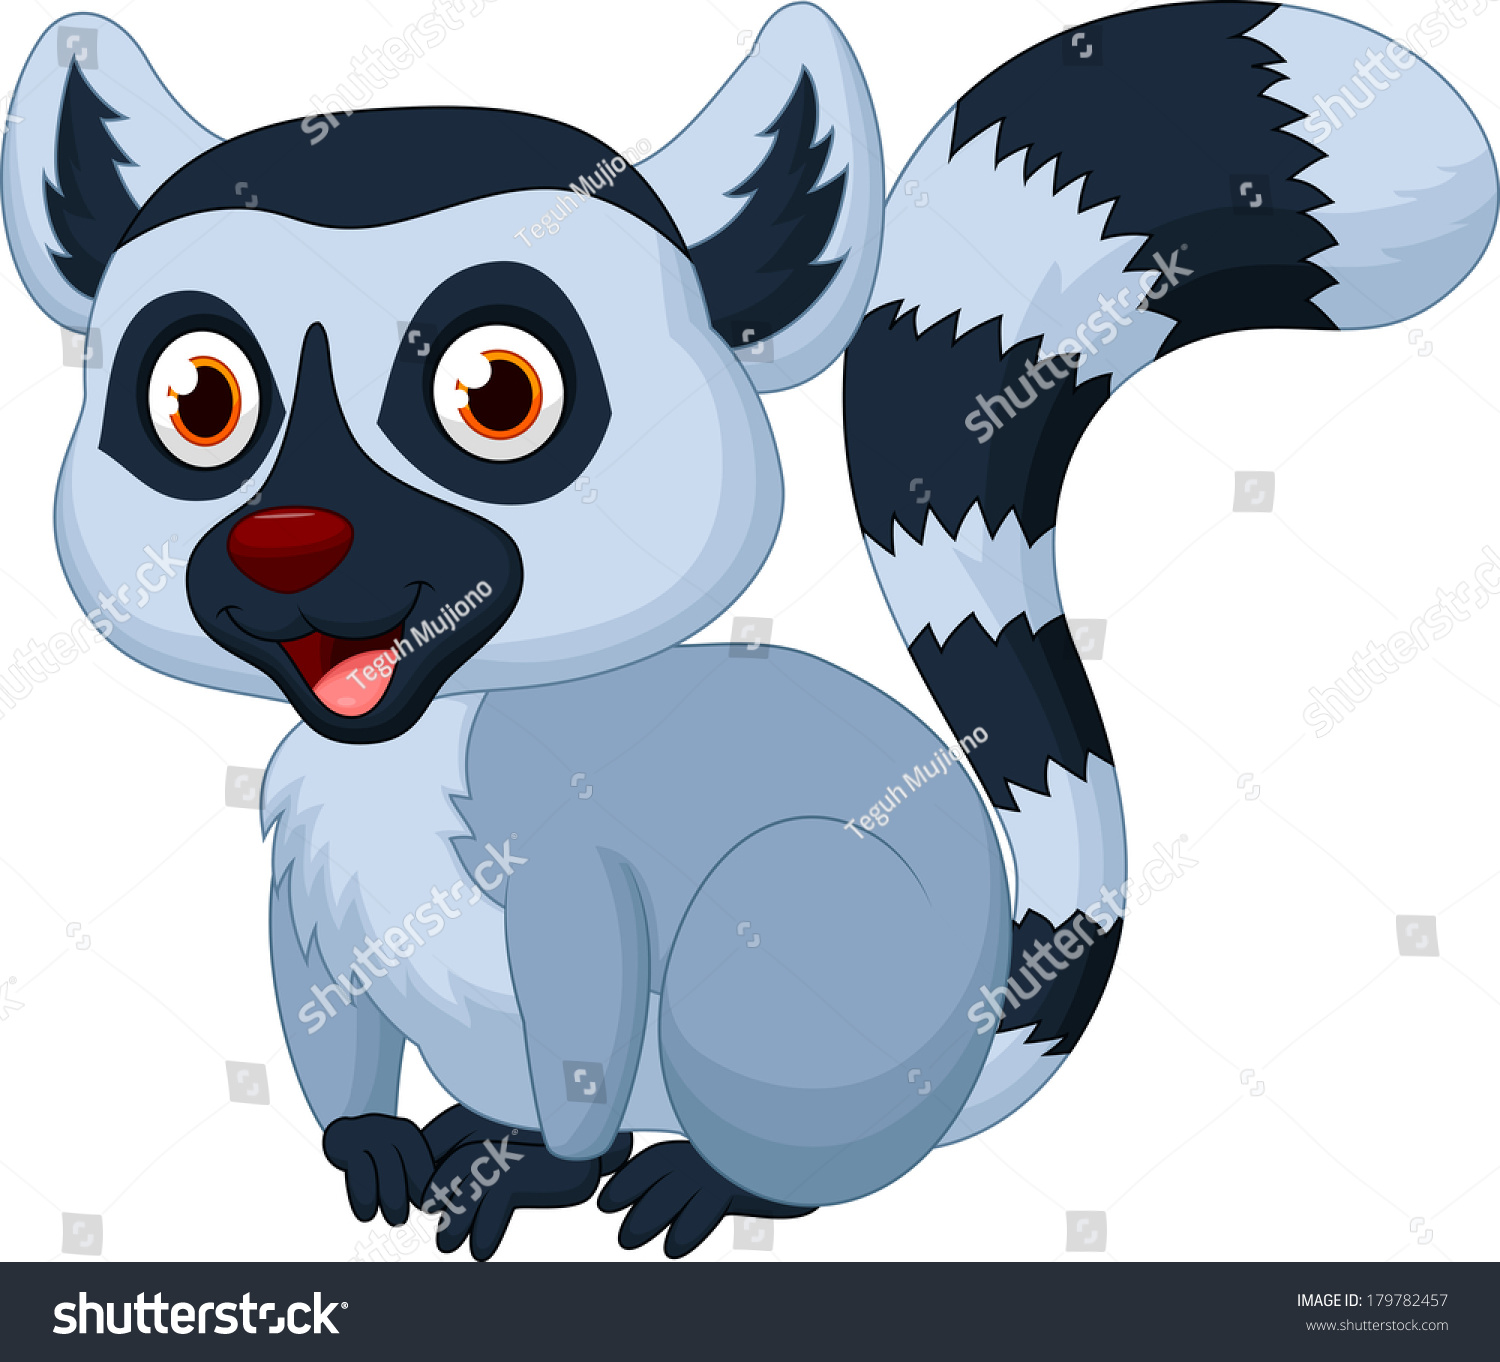 Cute Lemur Cartoon Stock Photo 179782457 : Shutterstock